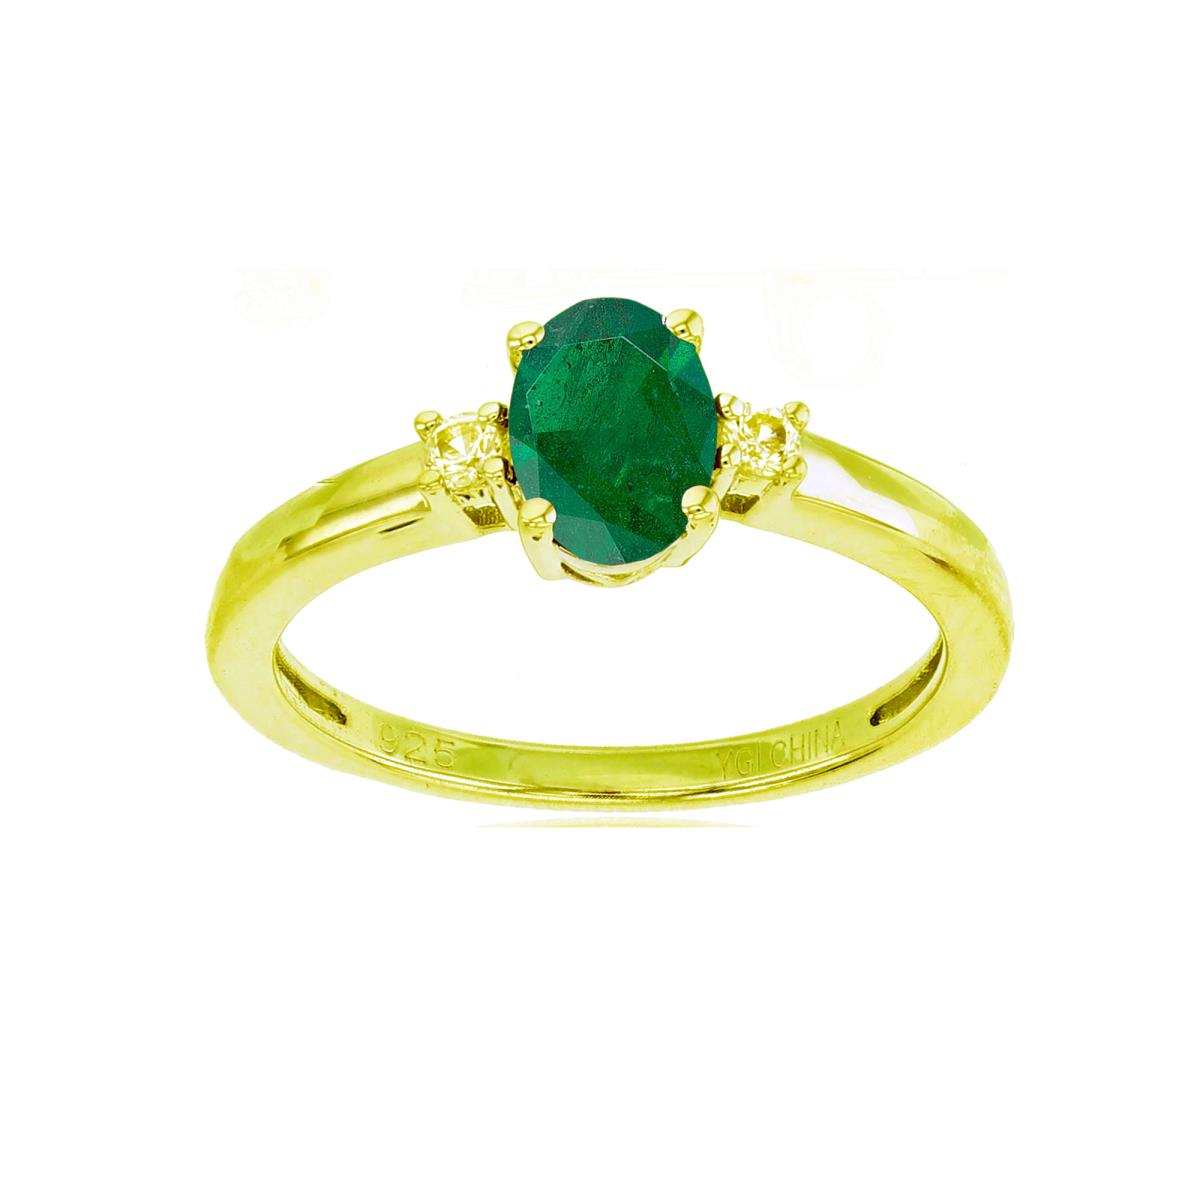 10K Yellow Gold 0.01cttw Rnd Diamonds & 7x5mm Ov Emerald Ring